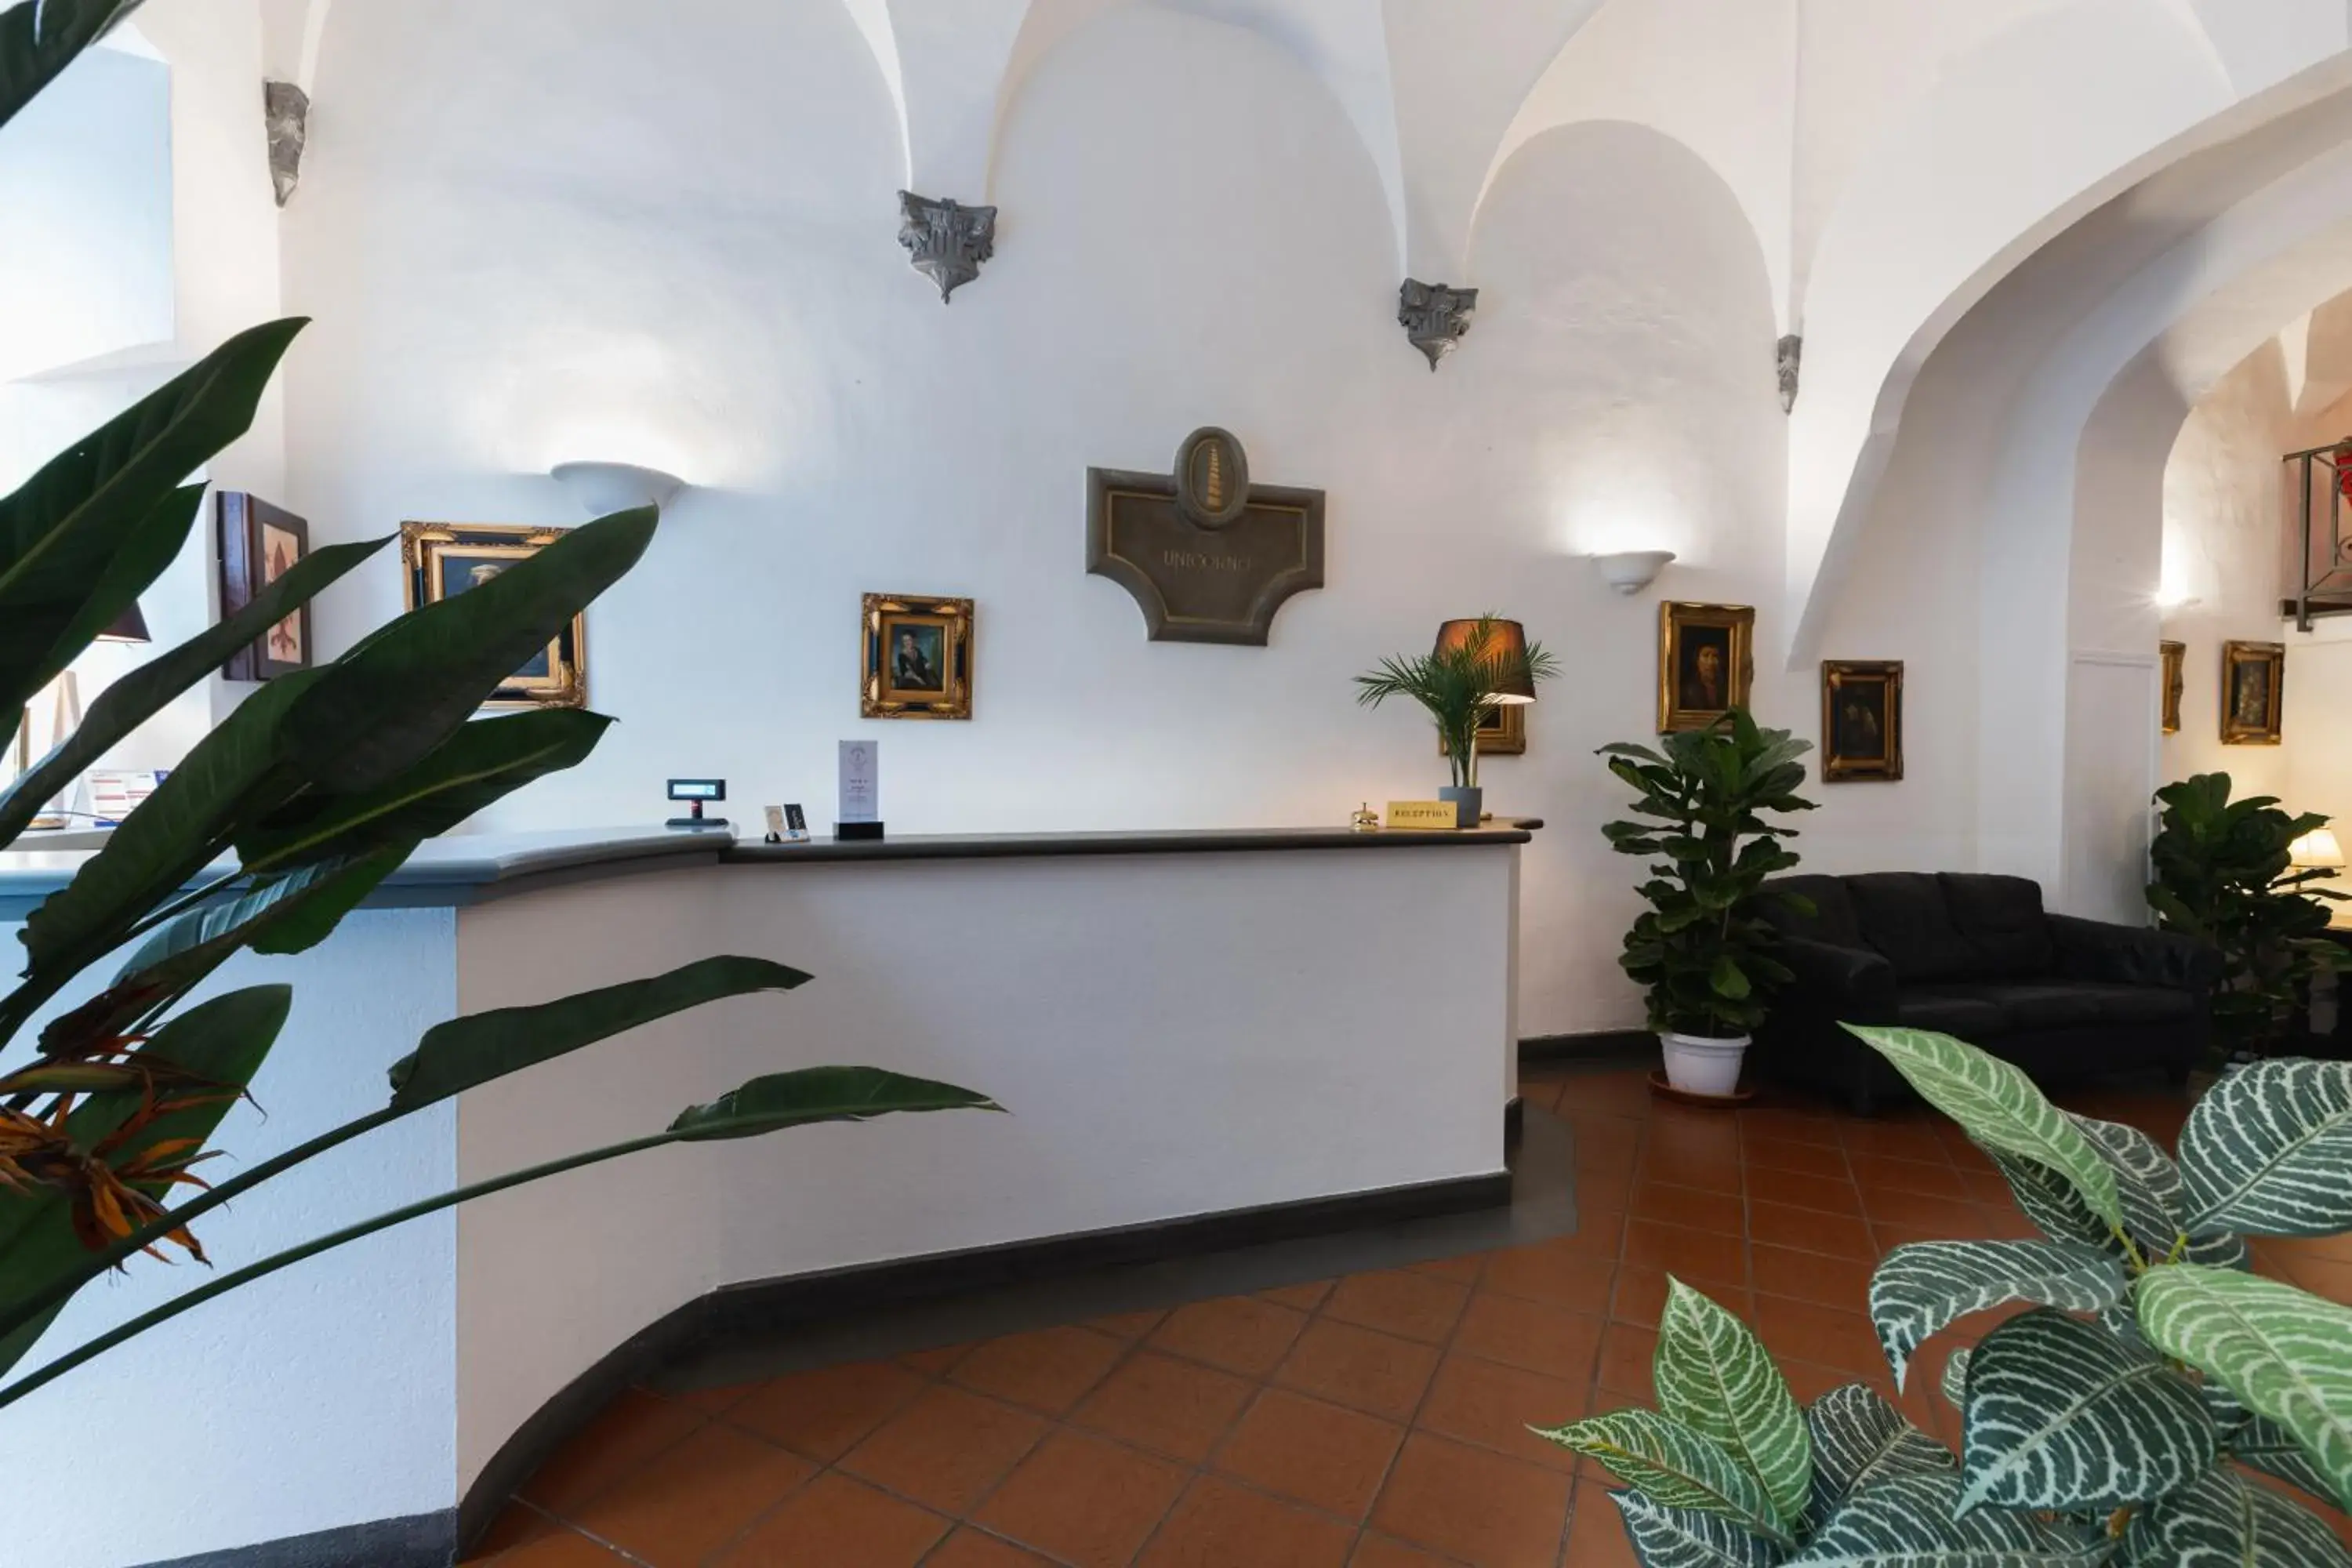 Lobby or reception, Lobby/Reception in Hotel Unicorno